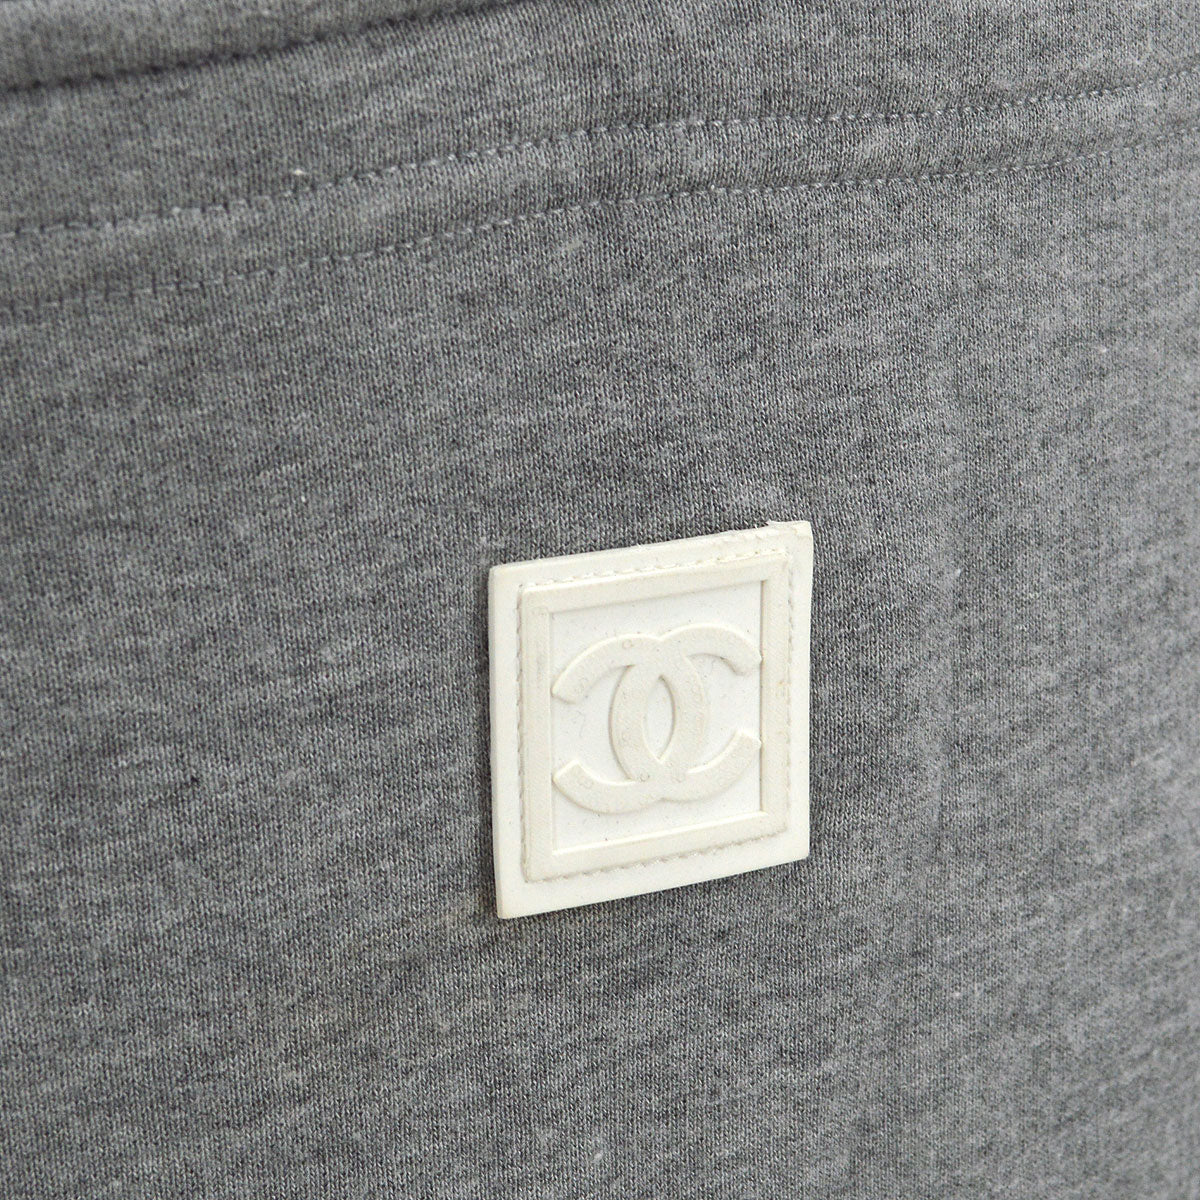 Chanel 2005 Spring Sport Line sleeveless hoodie 